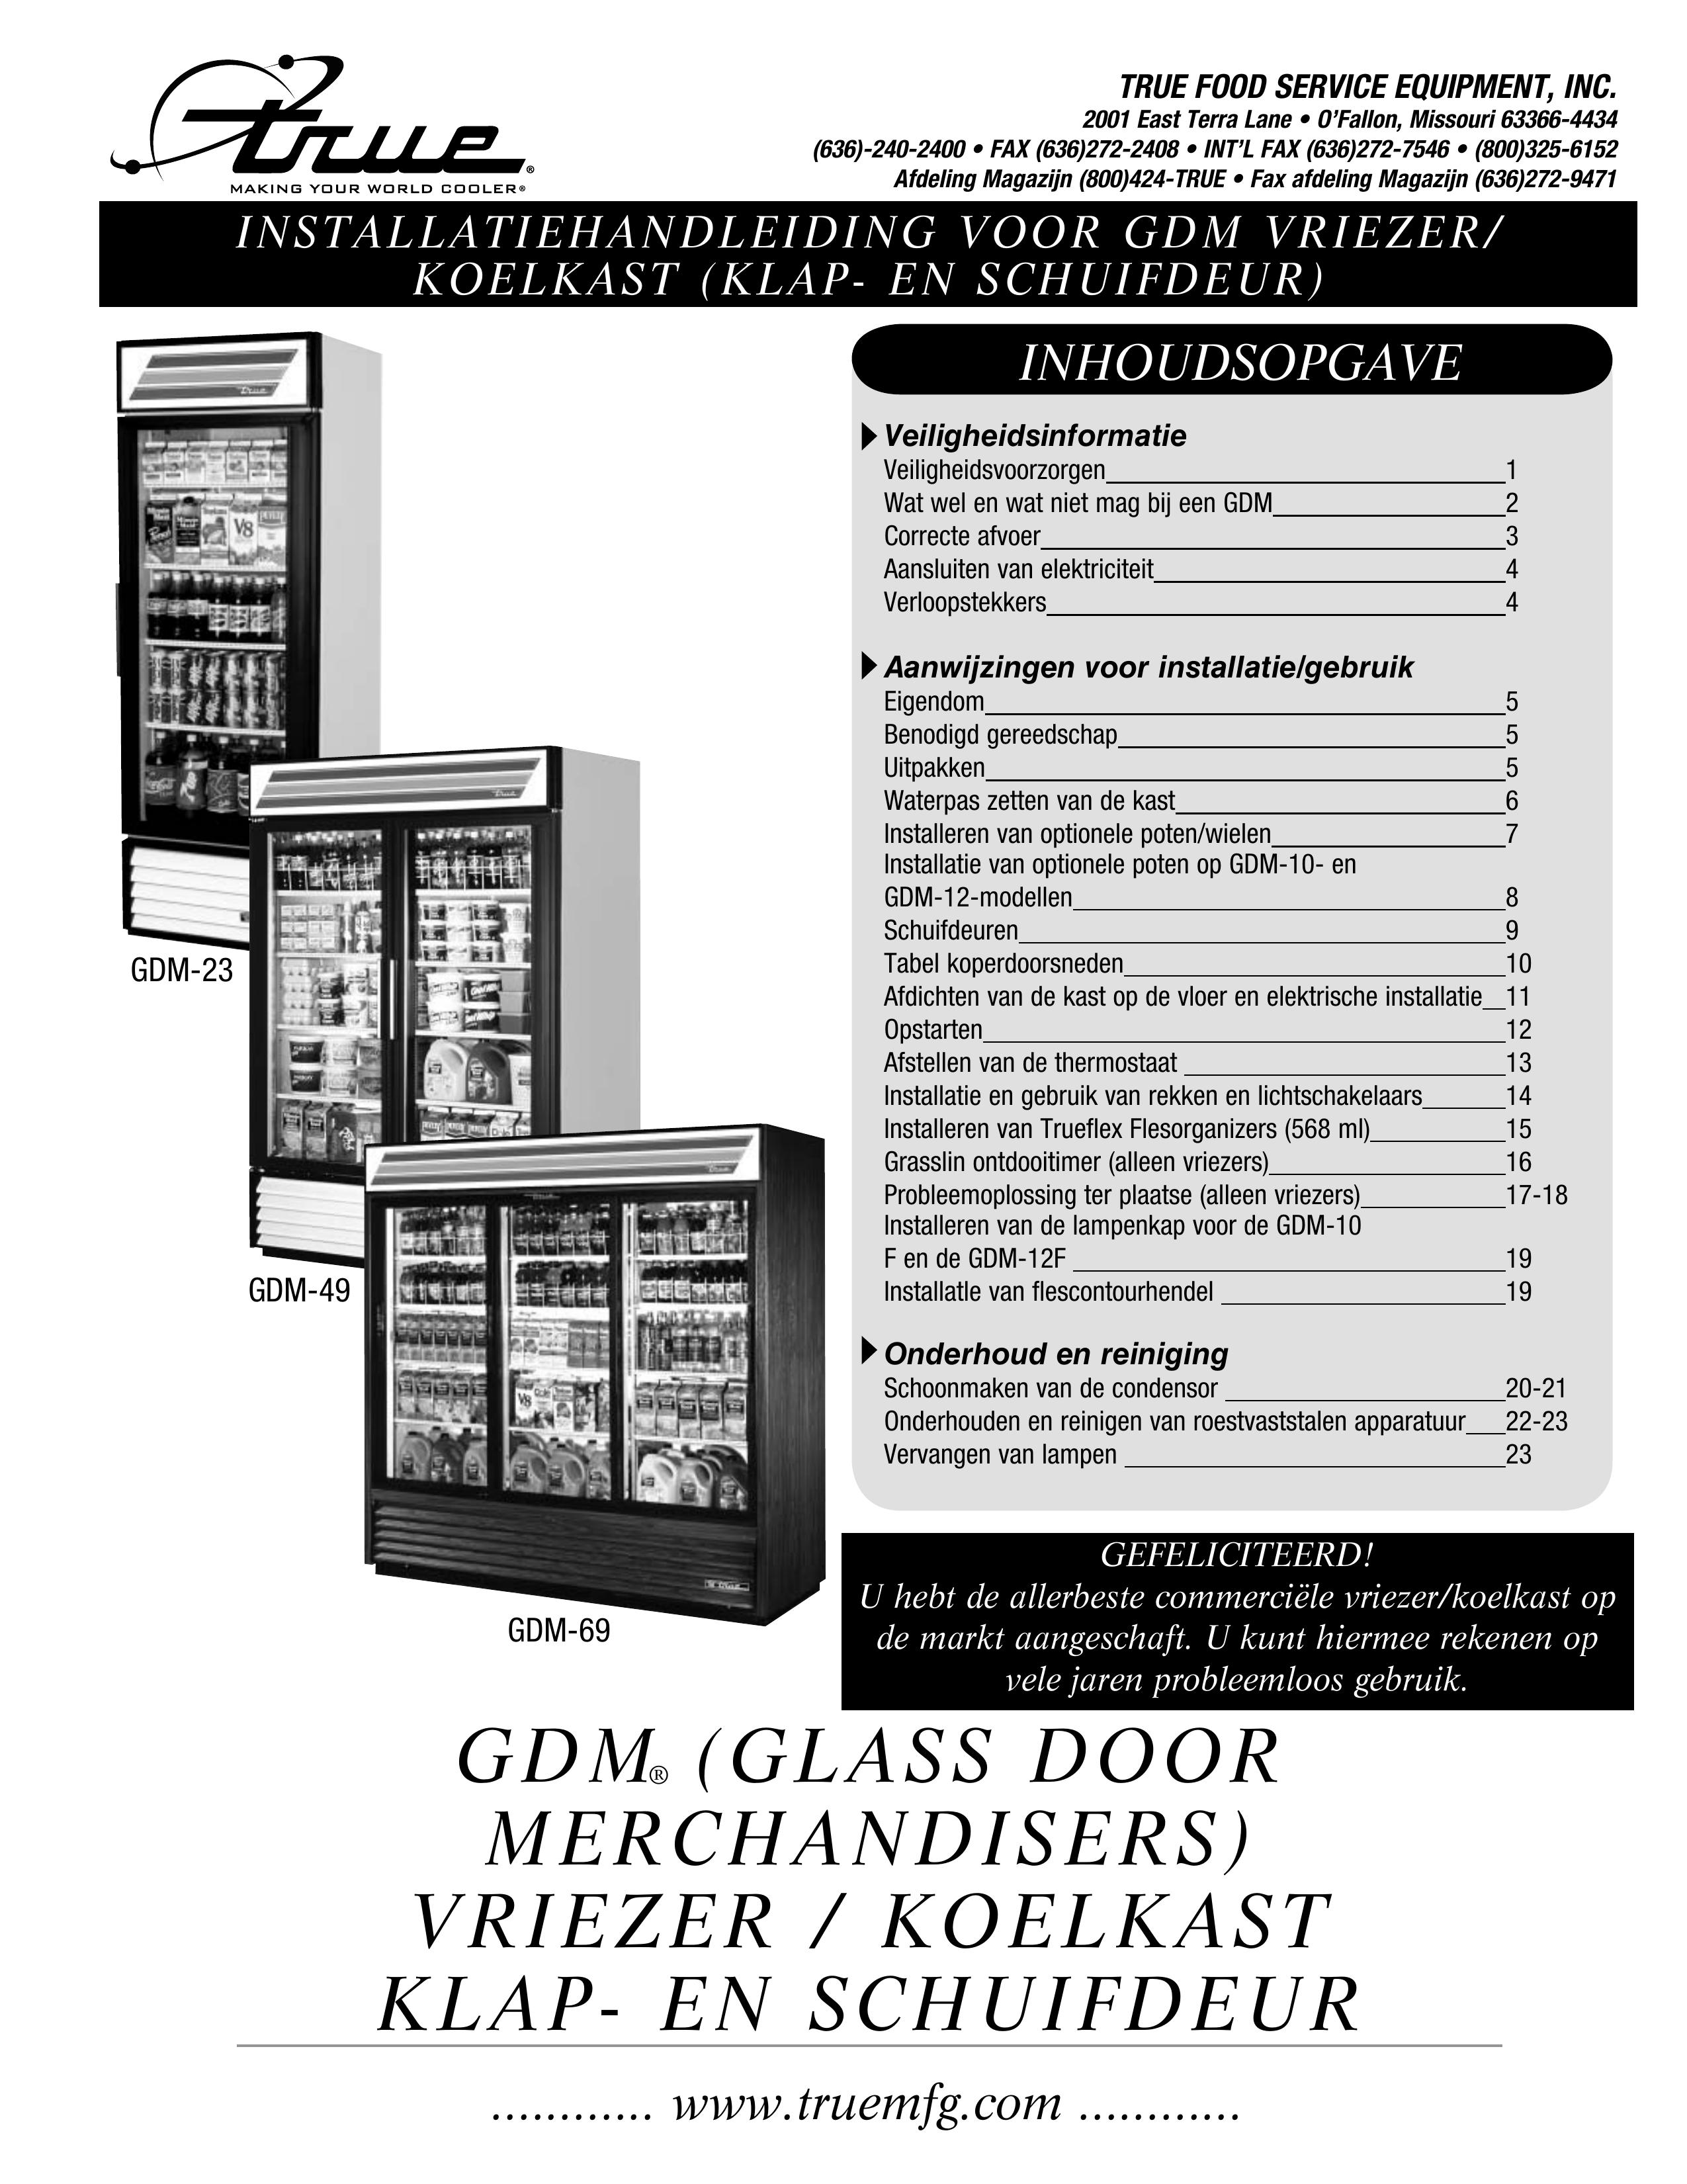 True Manufacturing Company GDM-69 Refrigerator User Manual